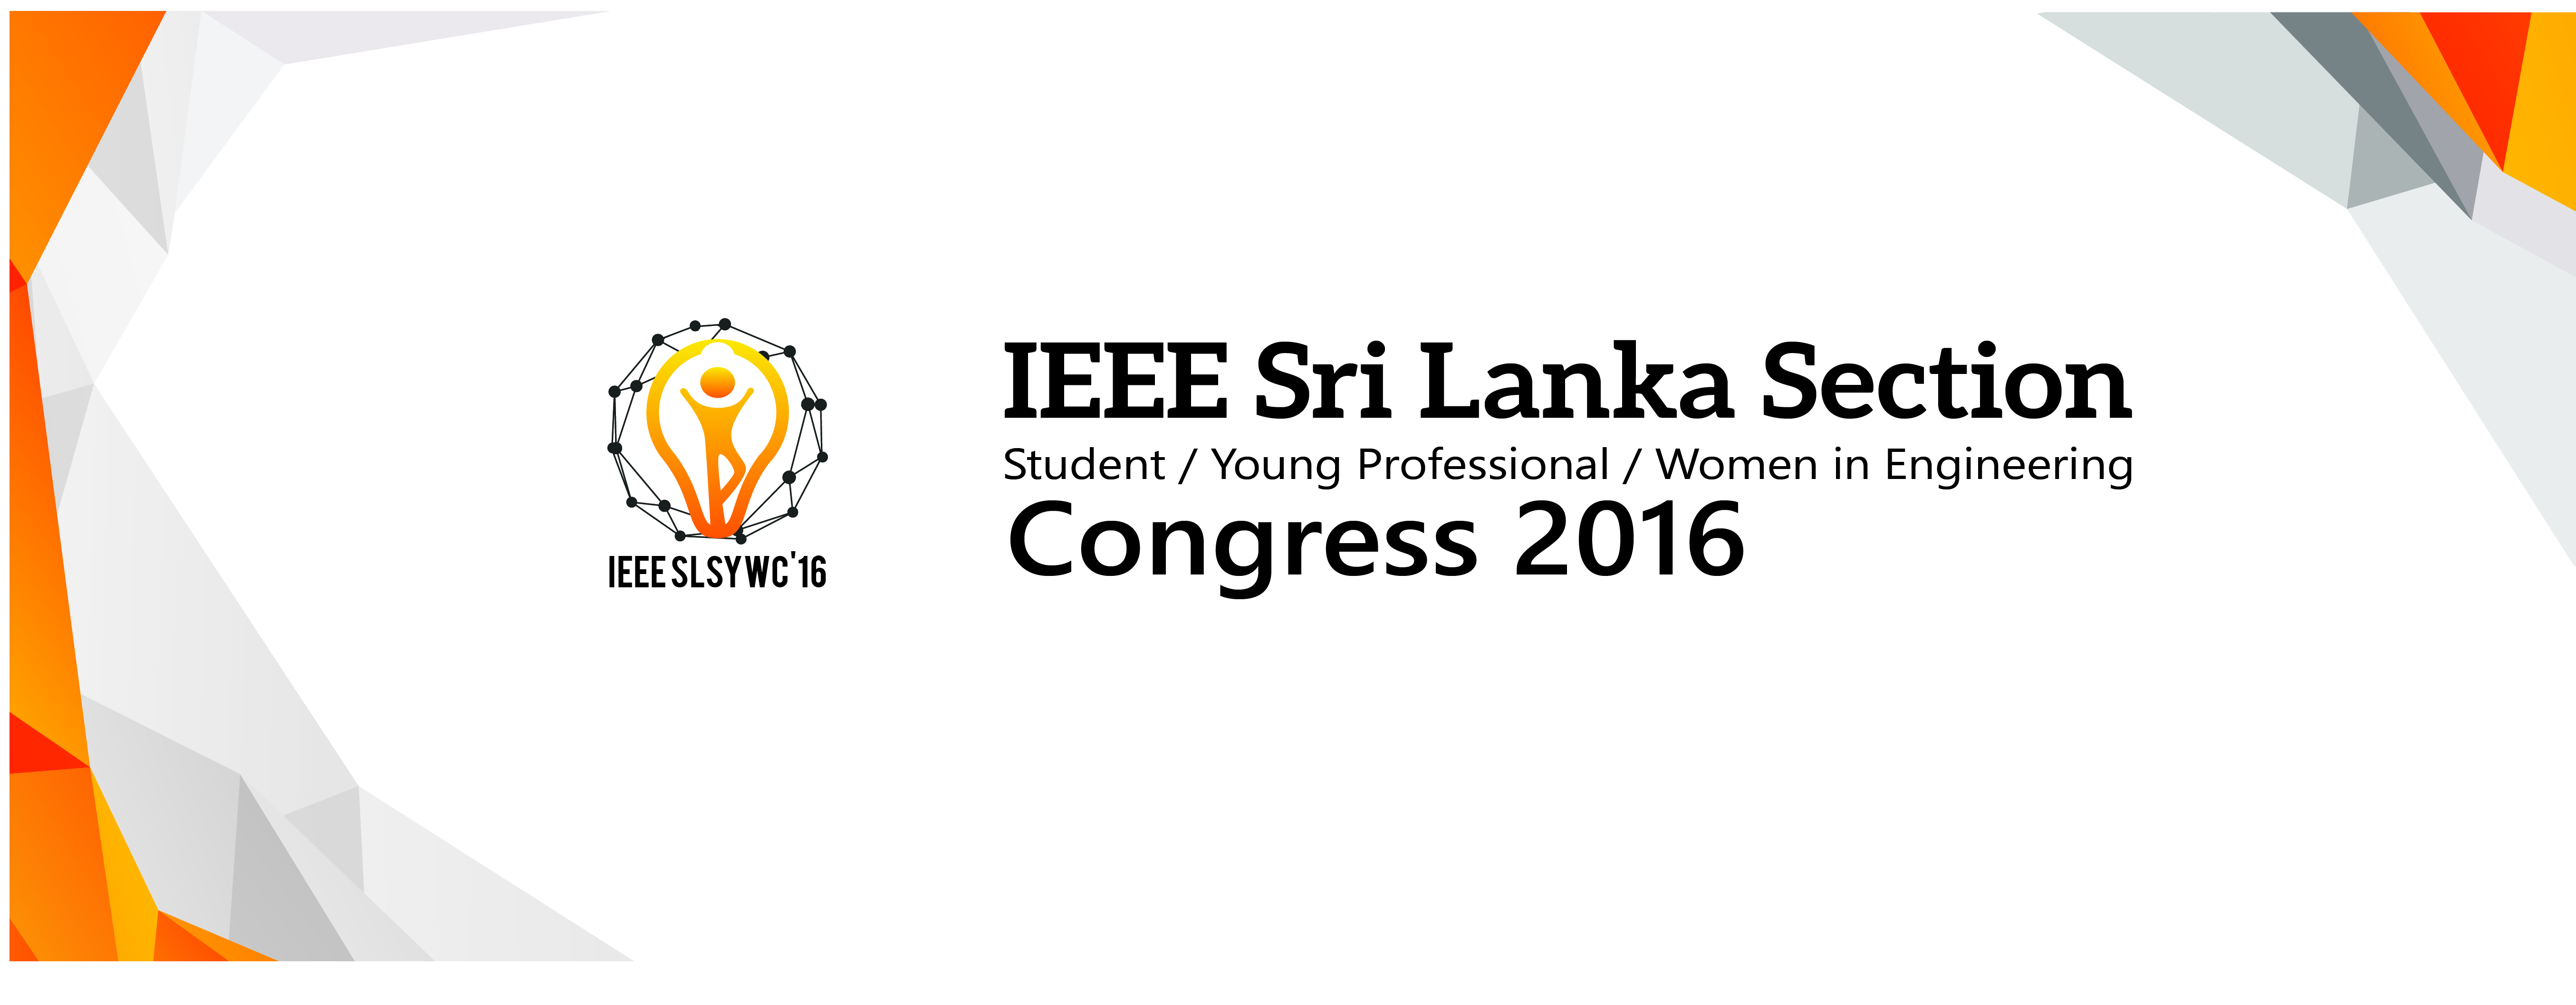 Awards Night – IEEE Sri Lanka Section Student/YP/WIE Congress 2016